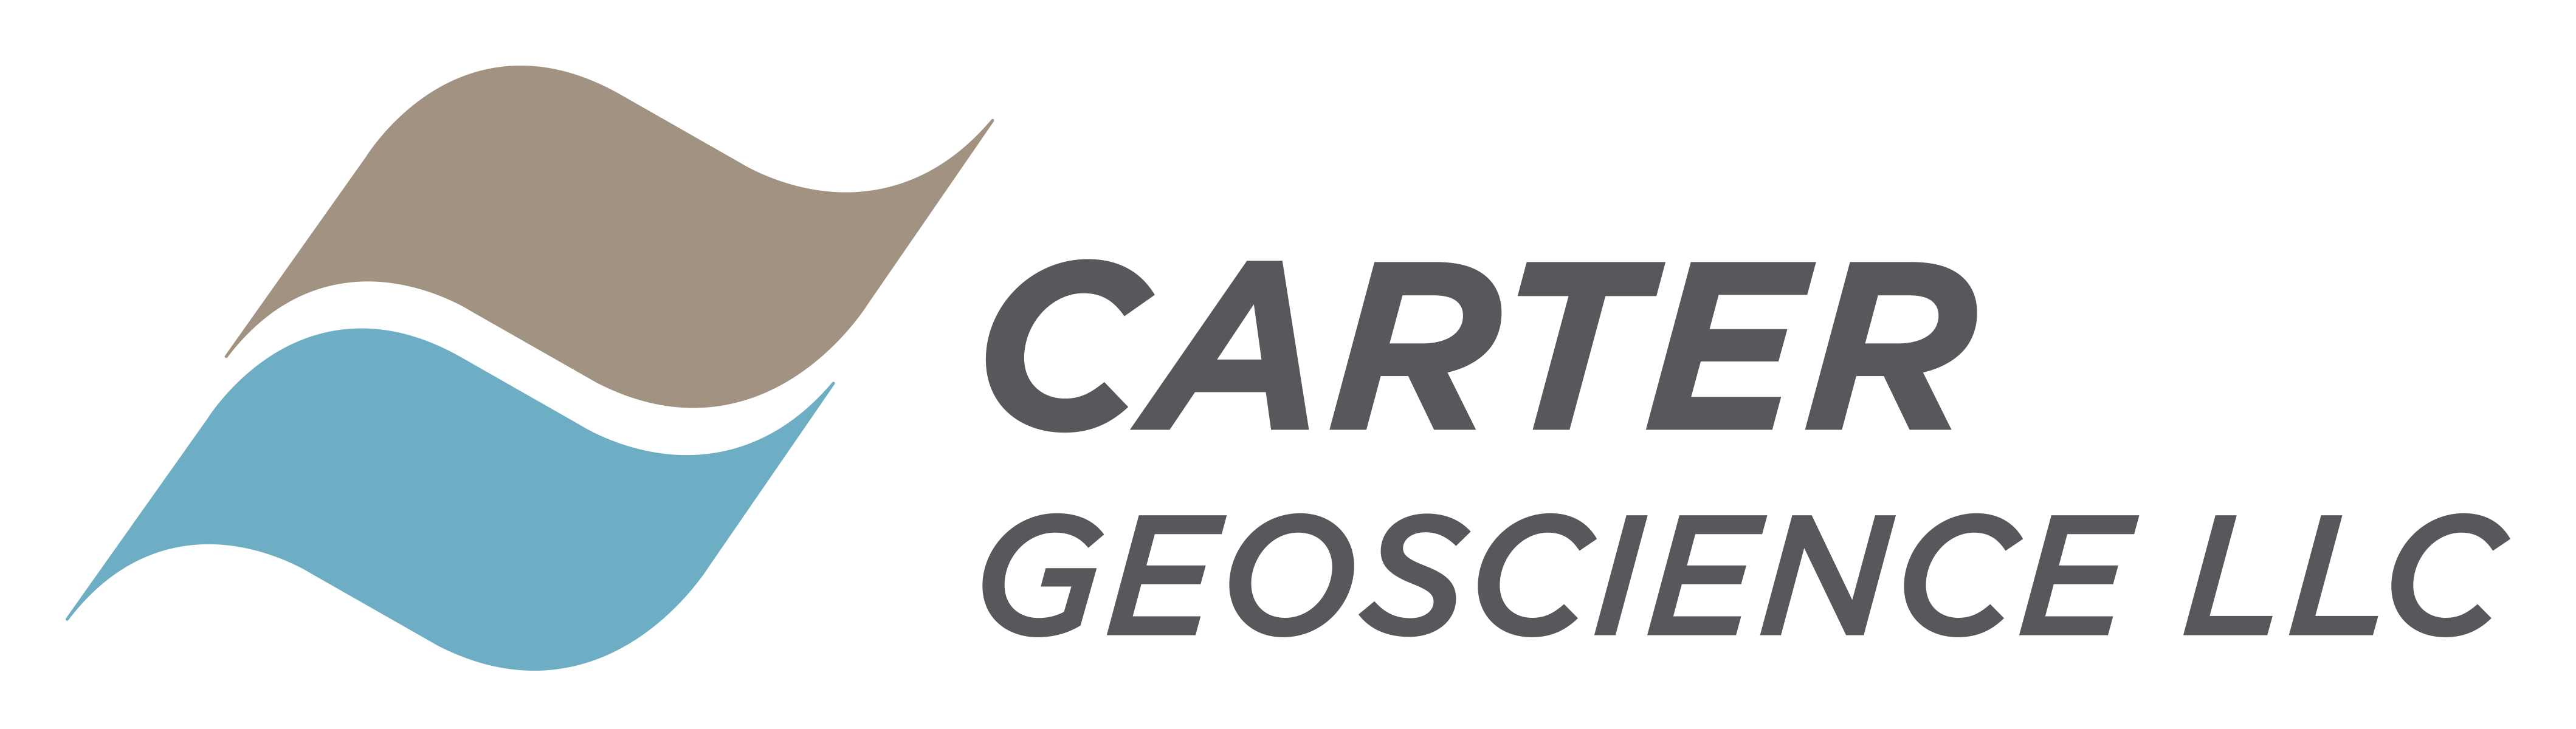 Carter Geoscience LLC